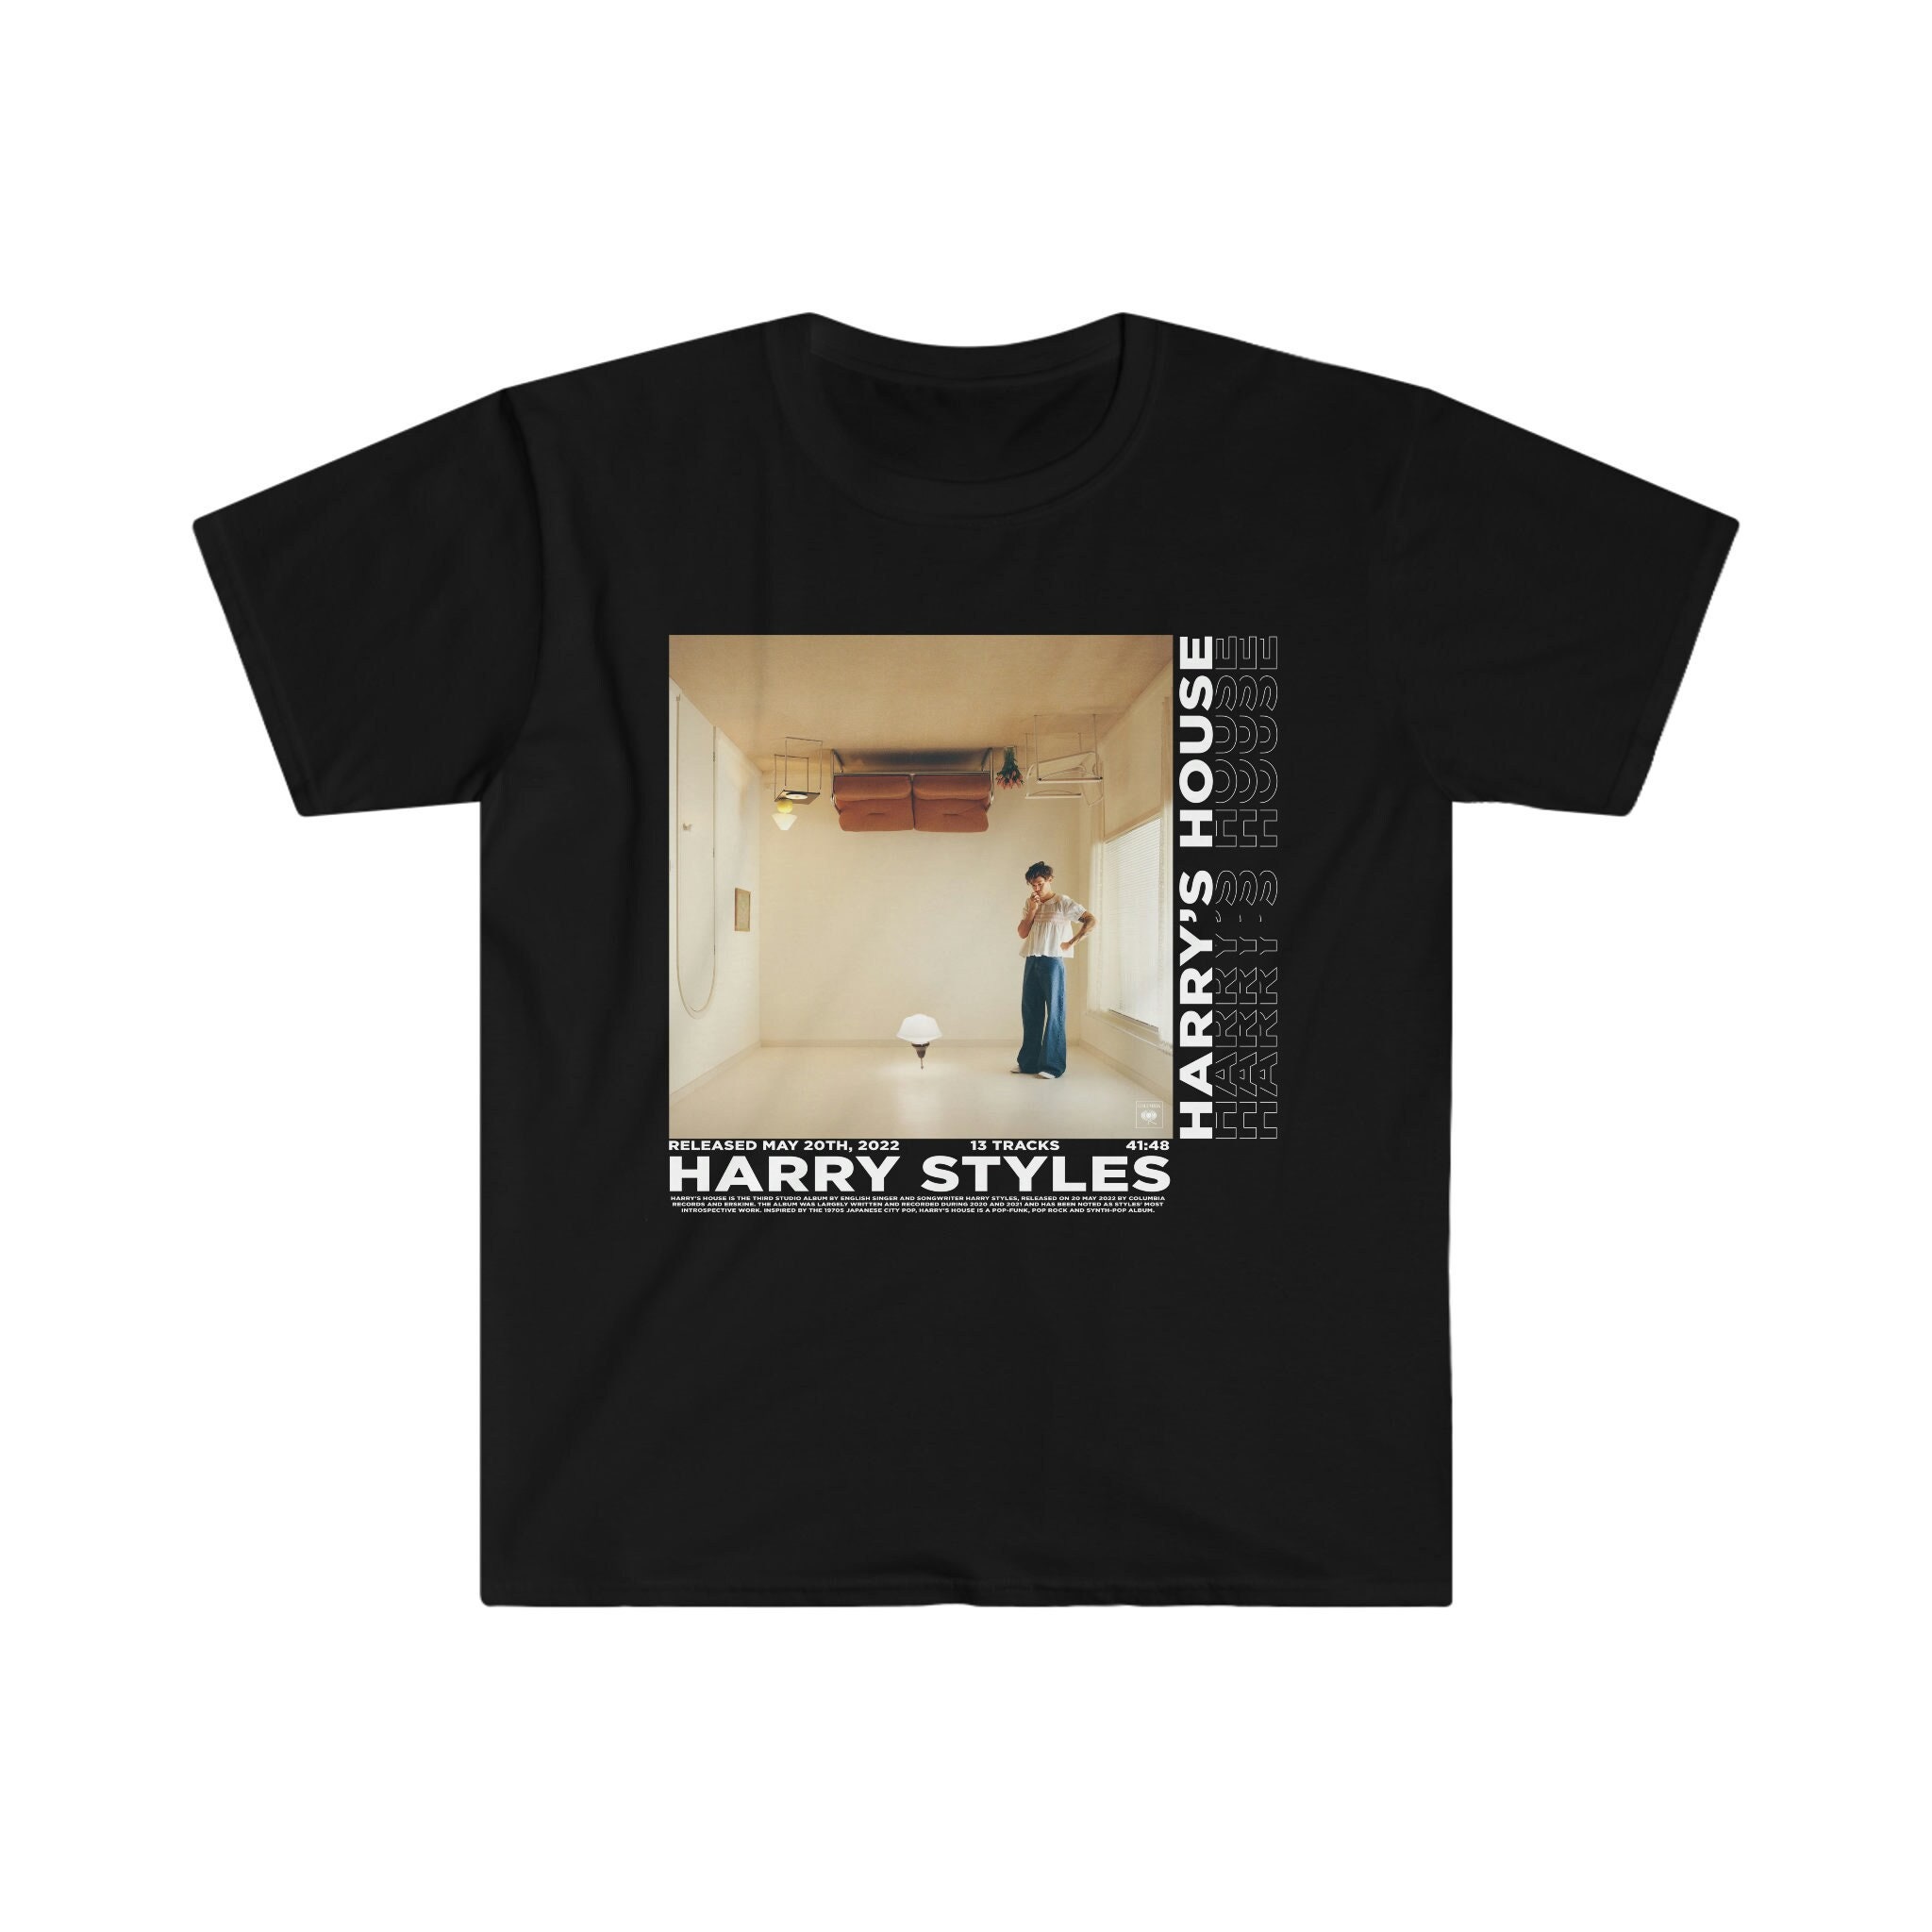 Harry styles shirt, harry styles merch, harry styles gift ts - Inspire  Uplift